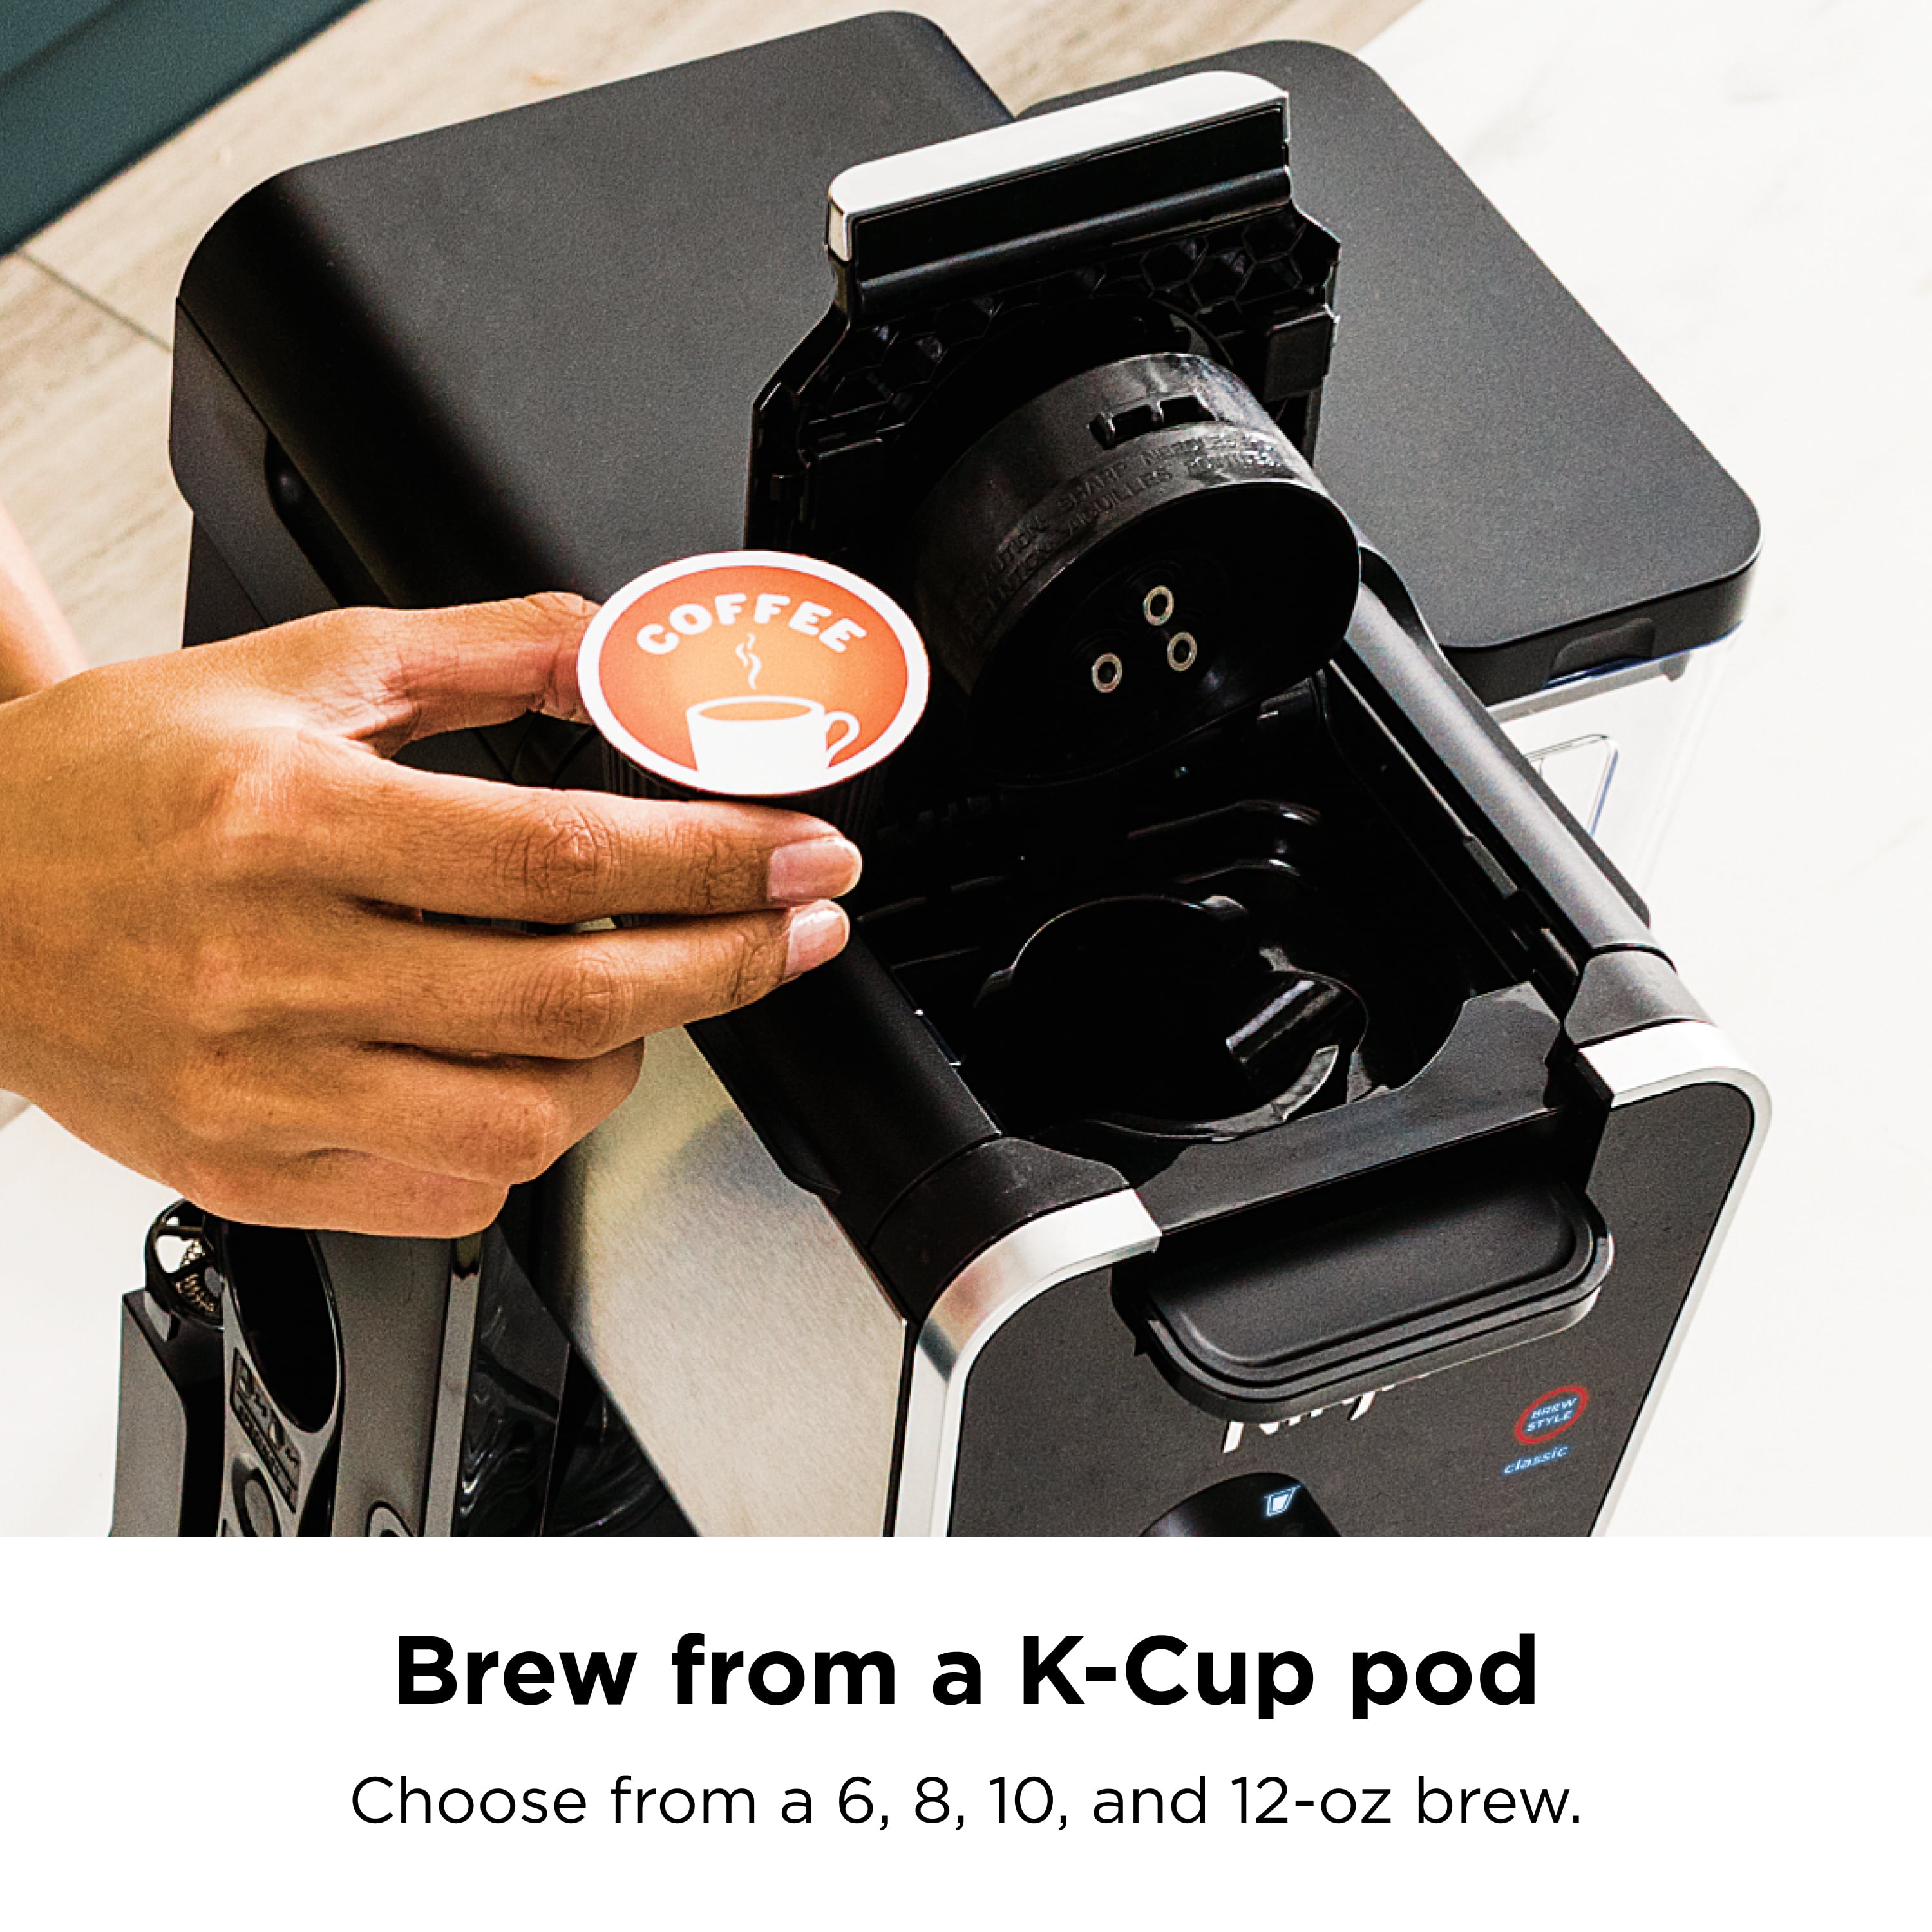 Ninja Single-Serve Pods & Grounds Specialty Coffee Maker 